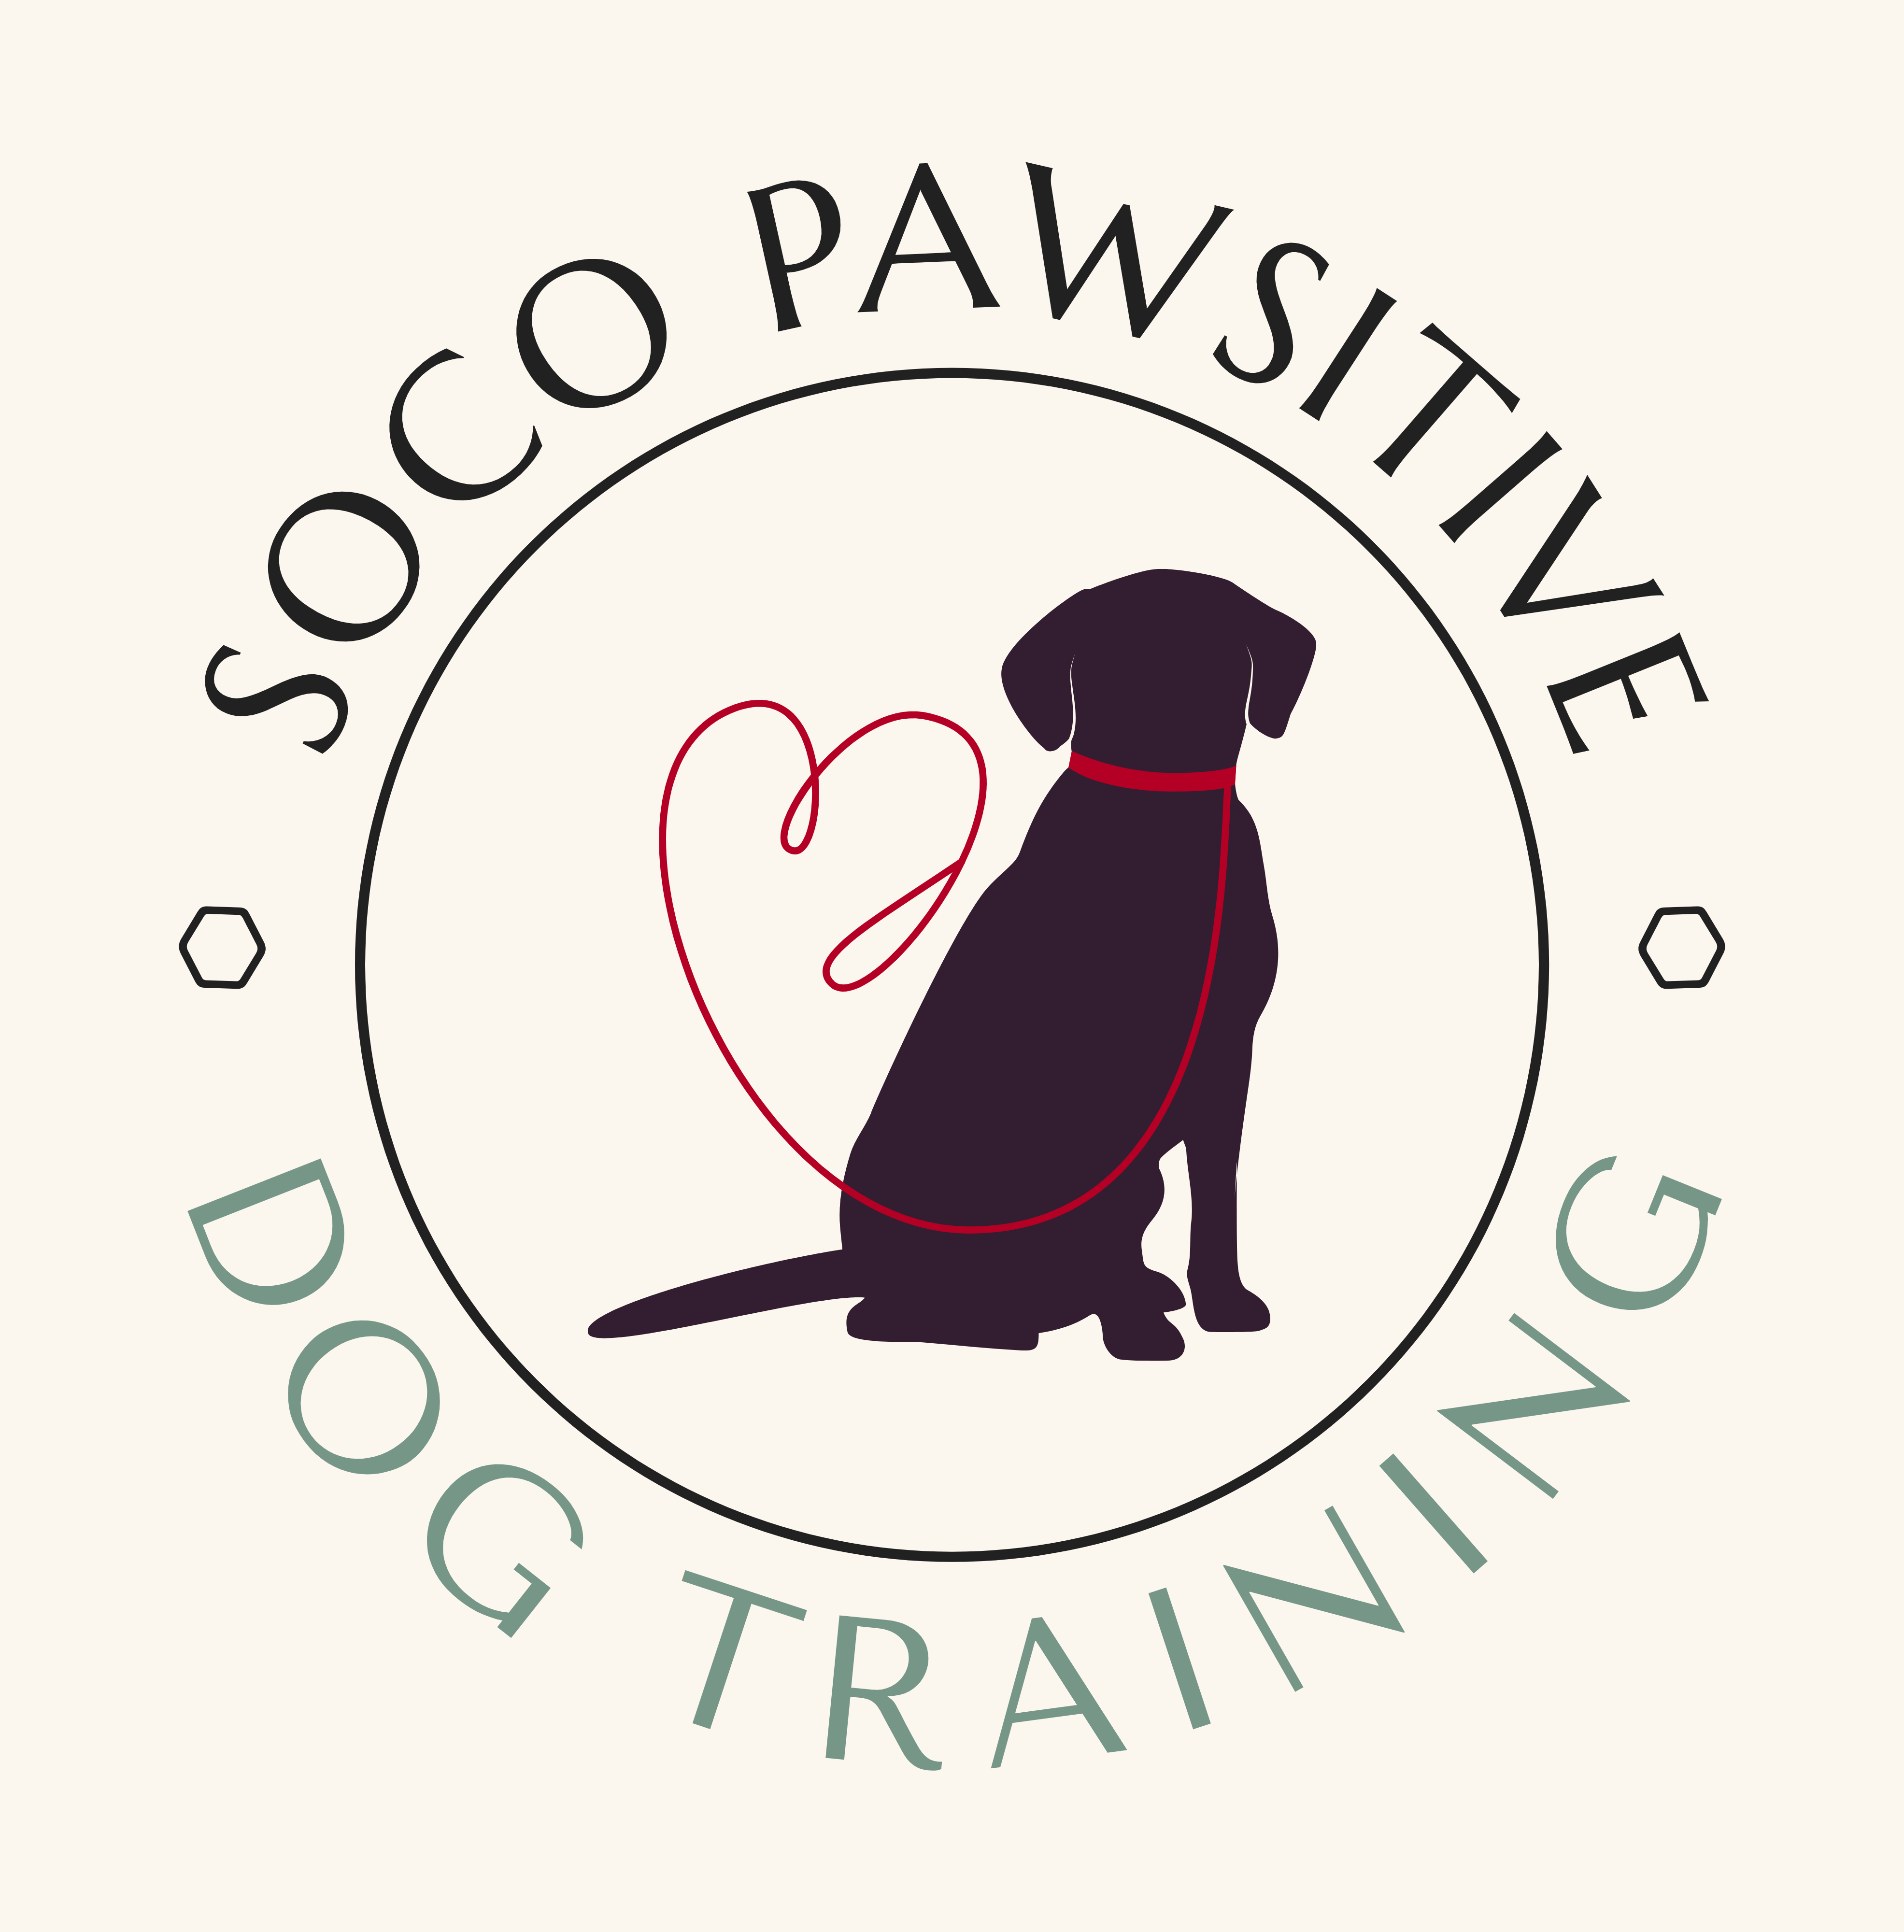 SOCO Pawsitive Dog Training